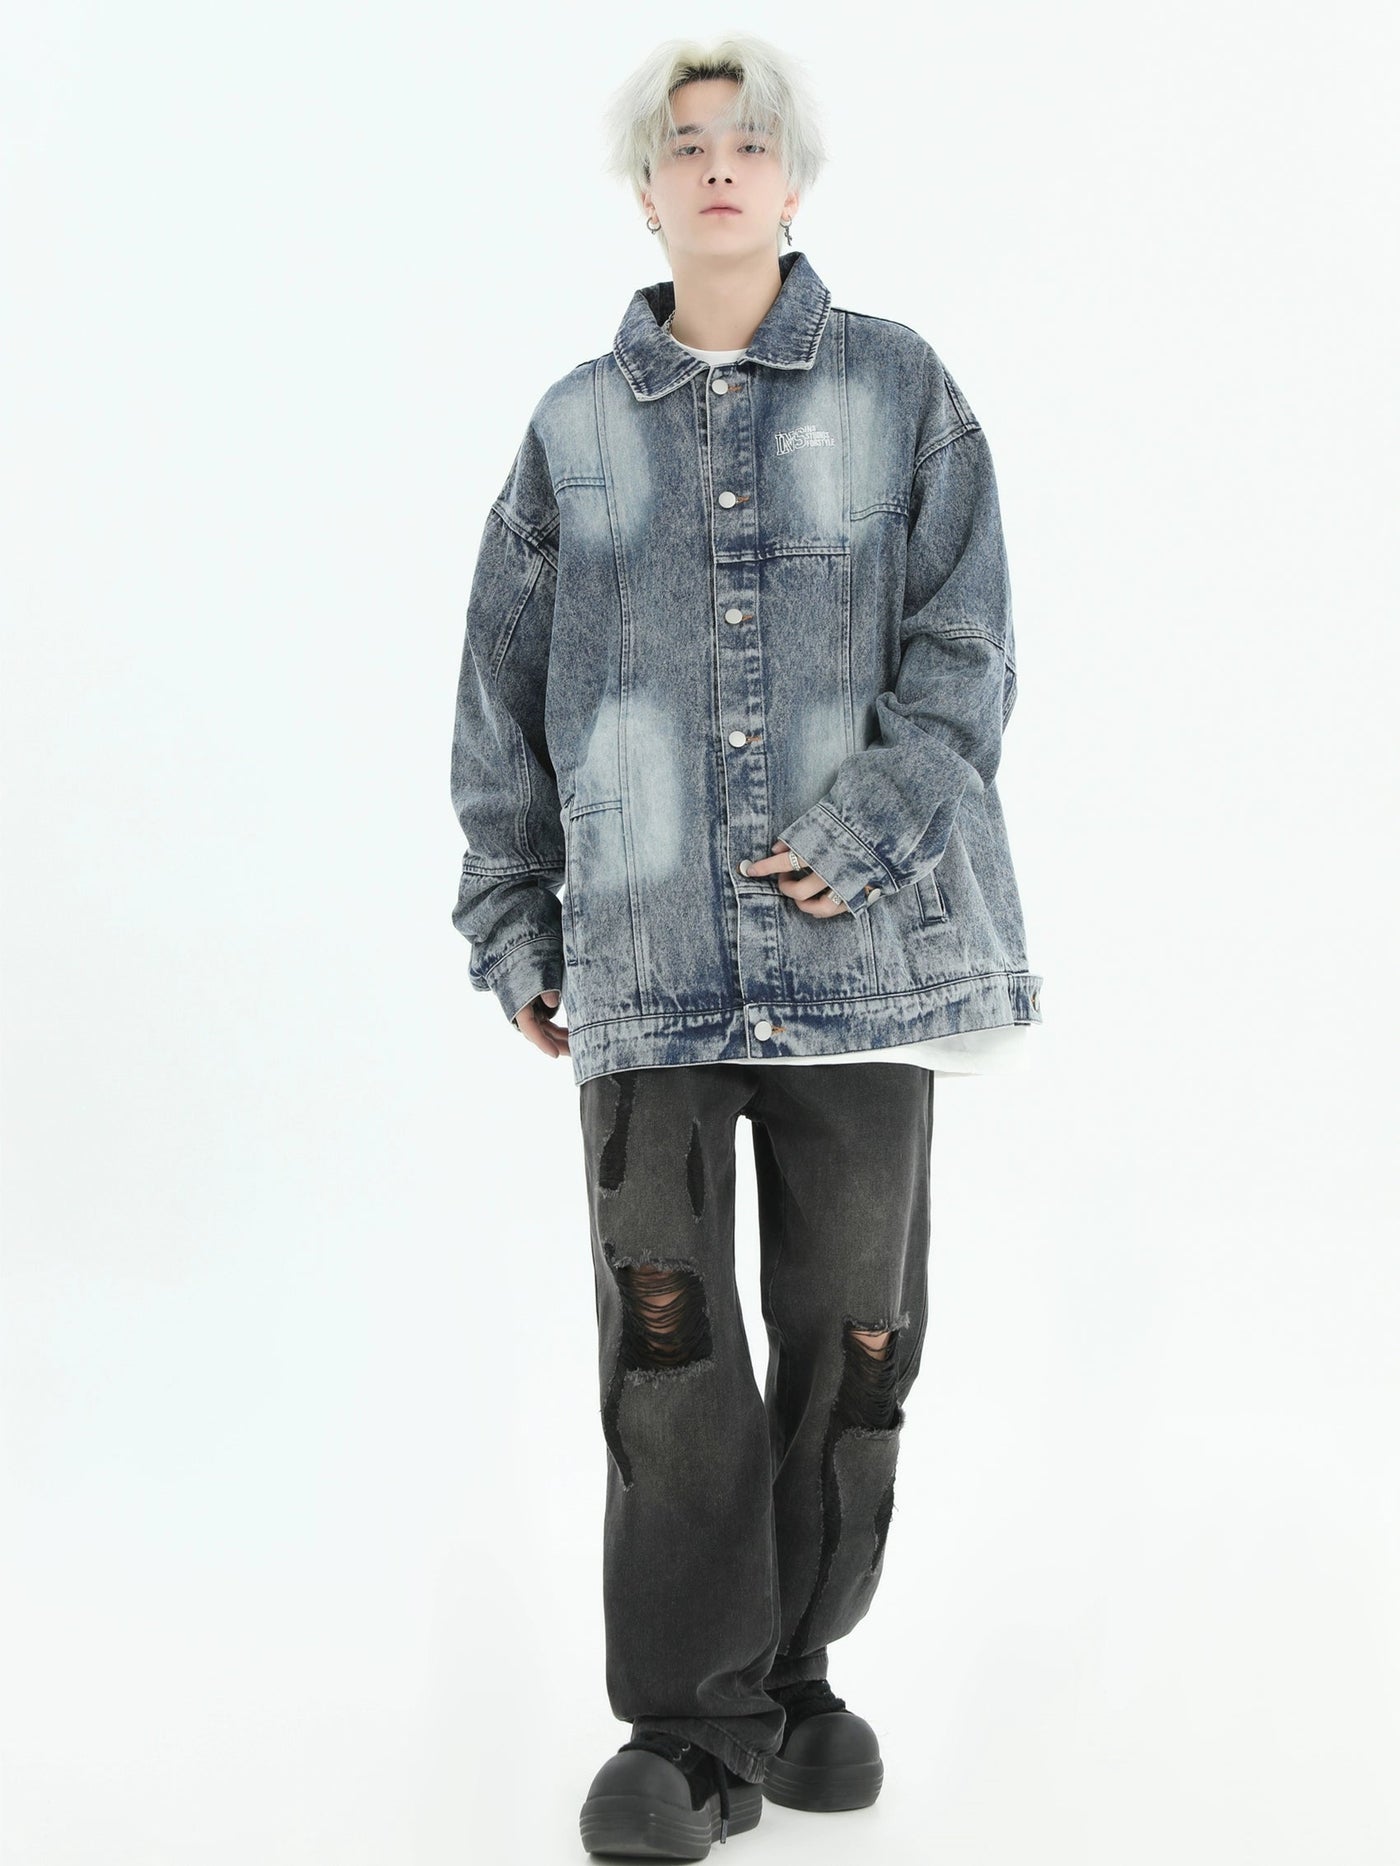 Fade Spots Detail Denim Jacket Korean Street Fashion Jacket By INS Korea Shop Online at OH Vault